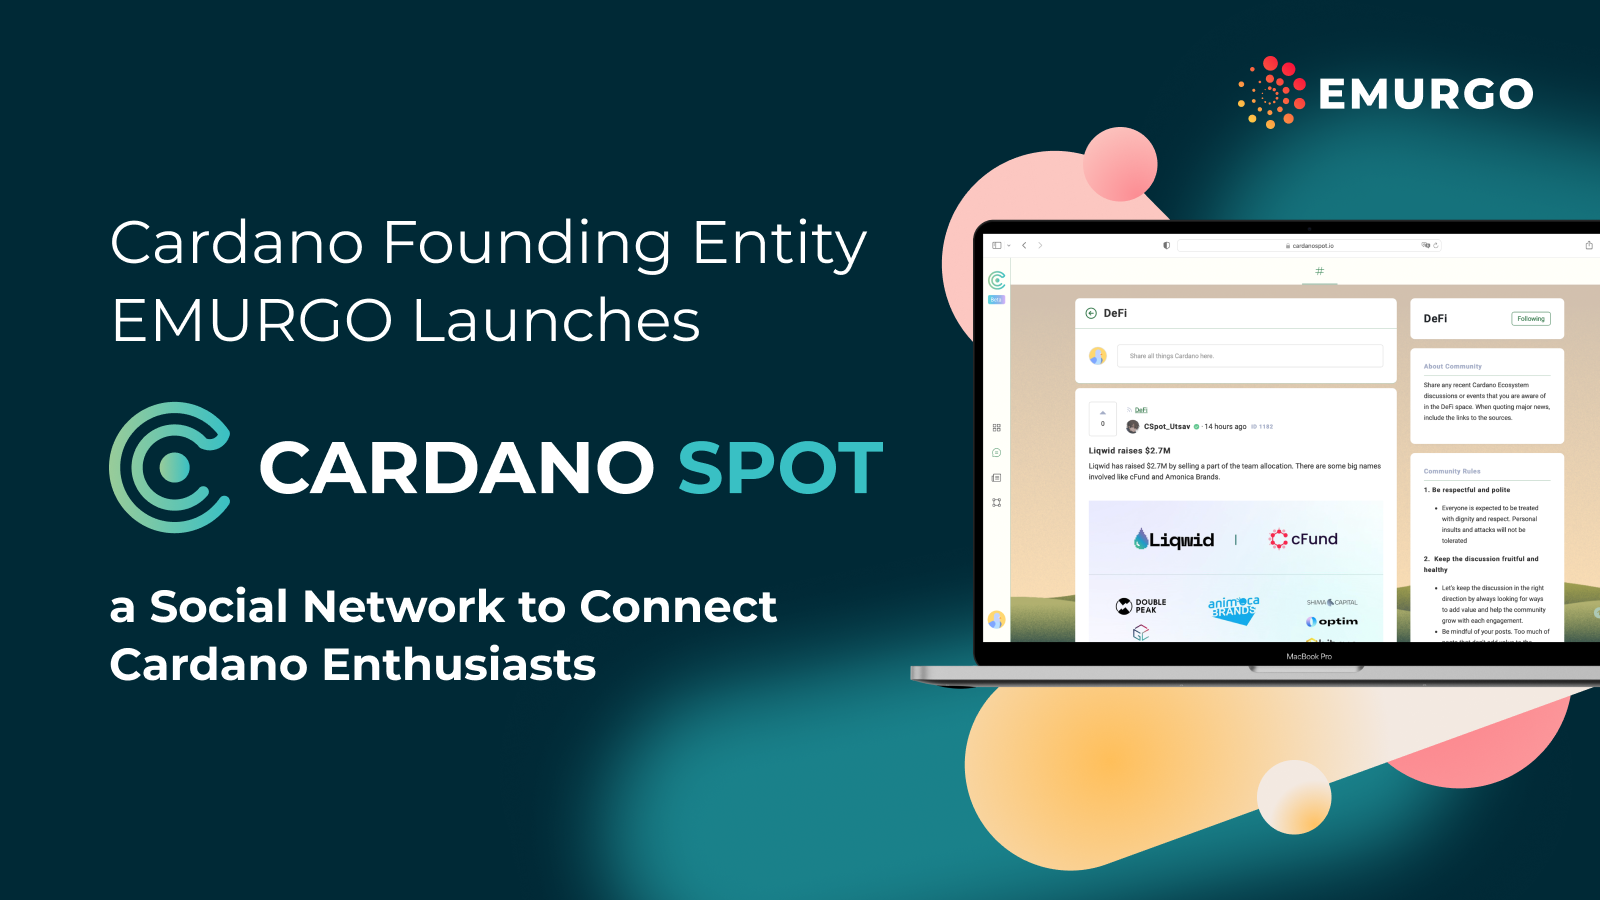 Cardano-Founding-Entity-Launches-Cardano-Spot-Social-Platform.png